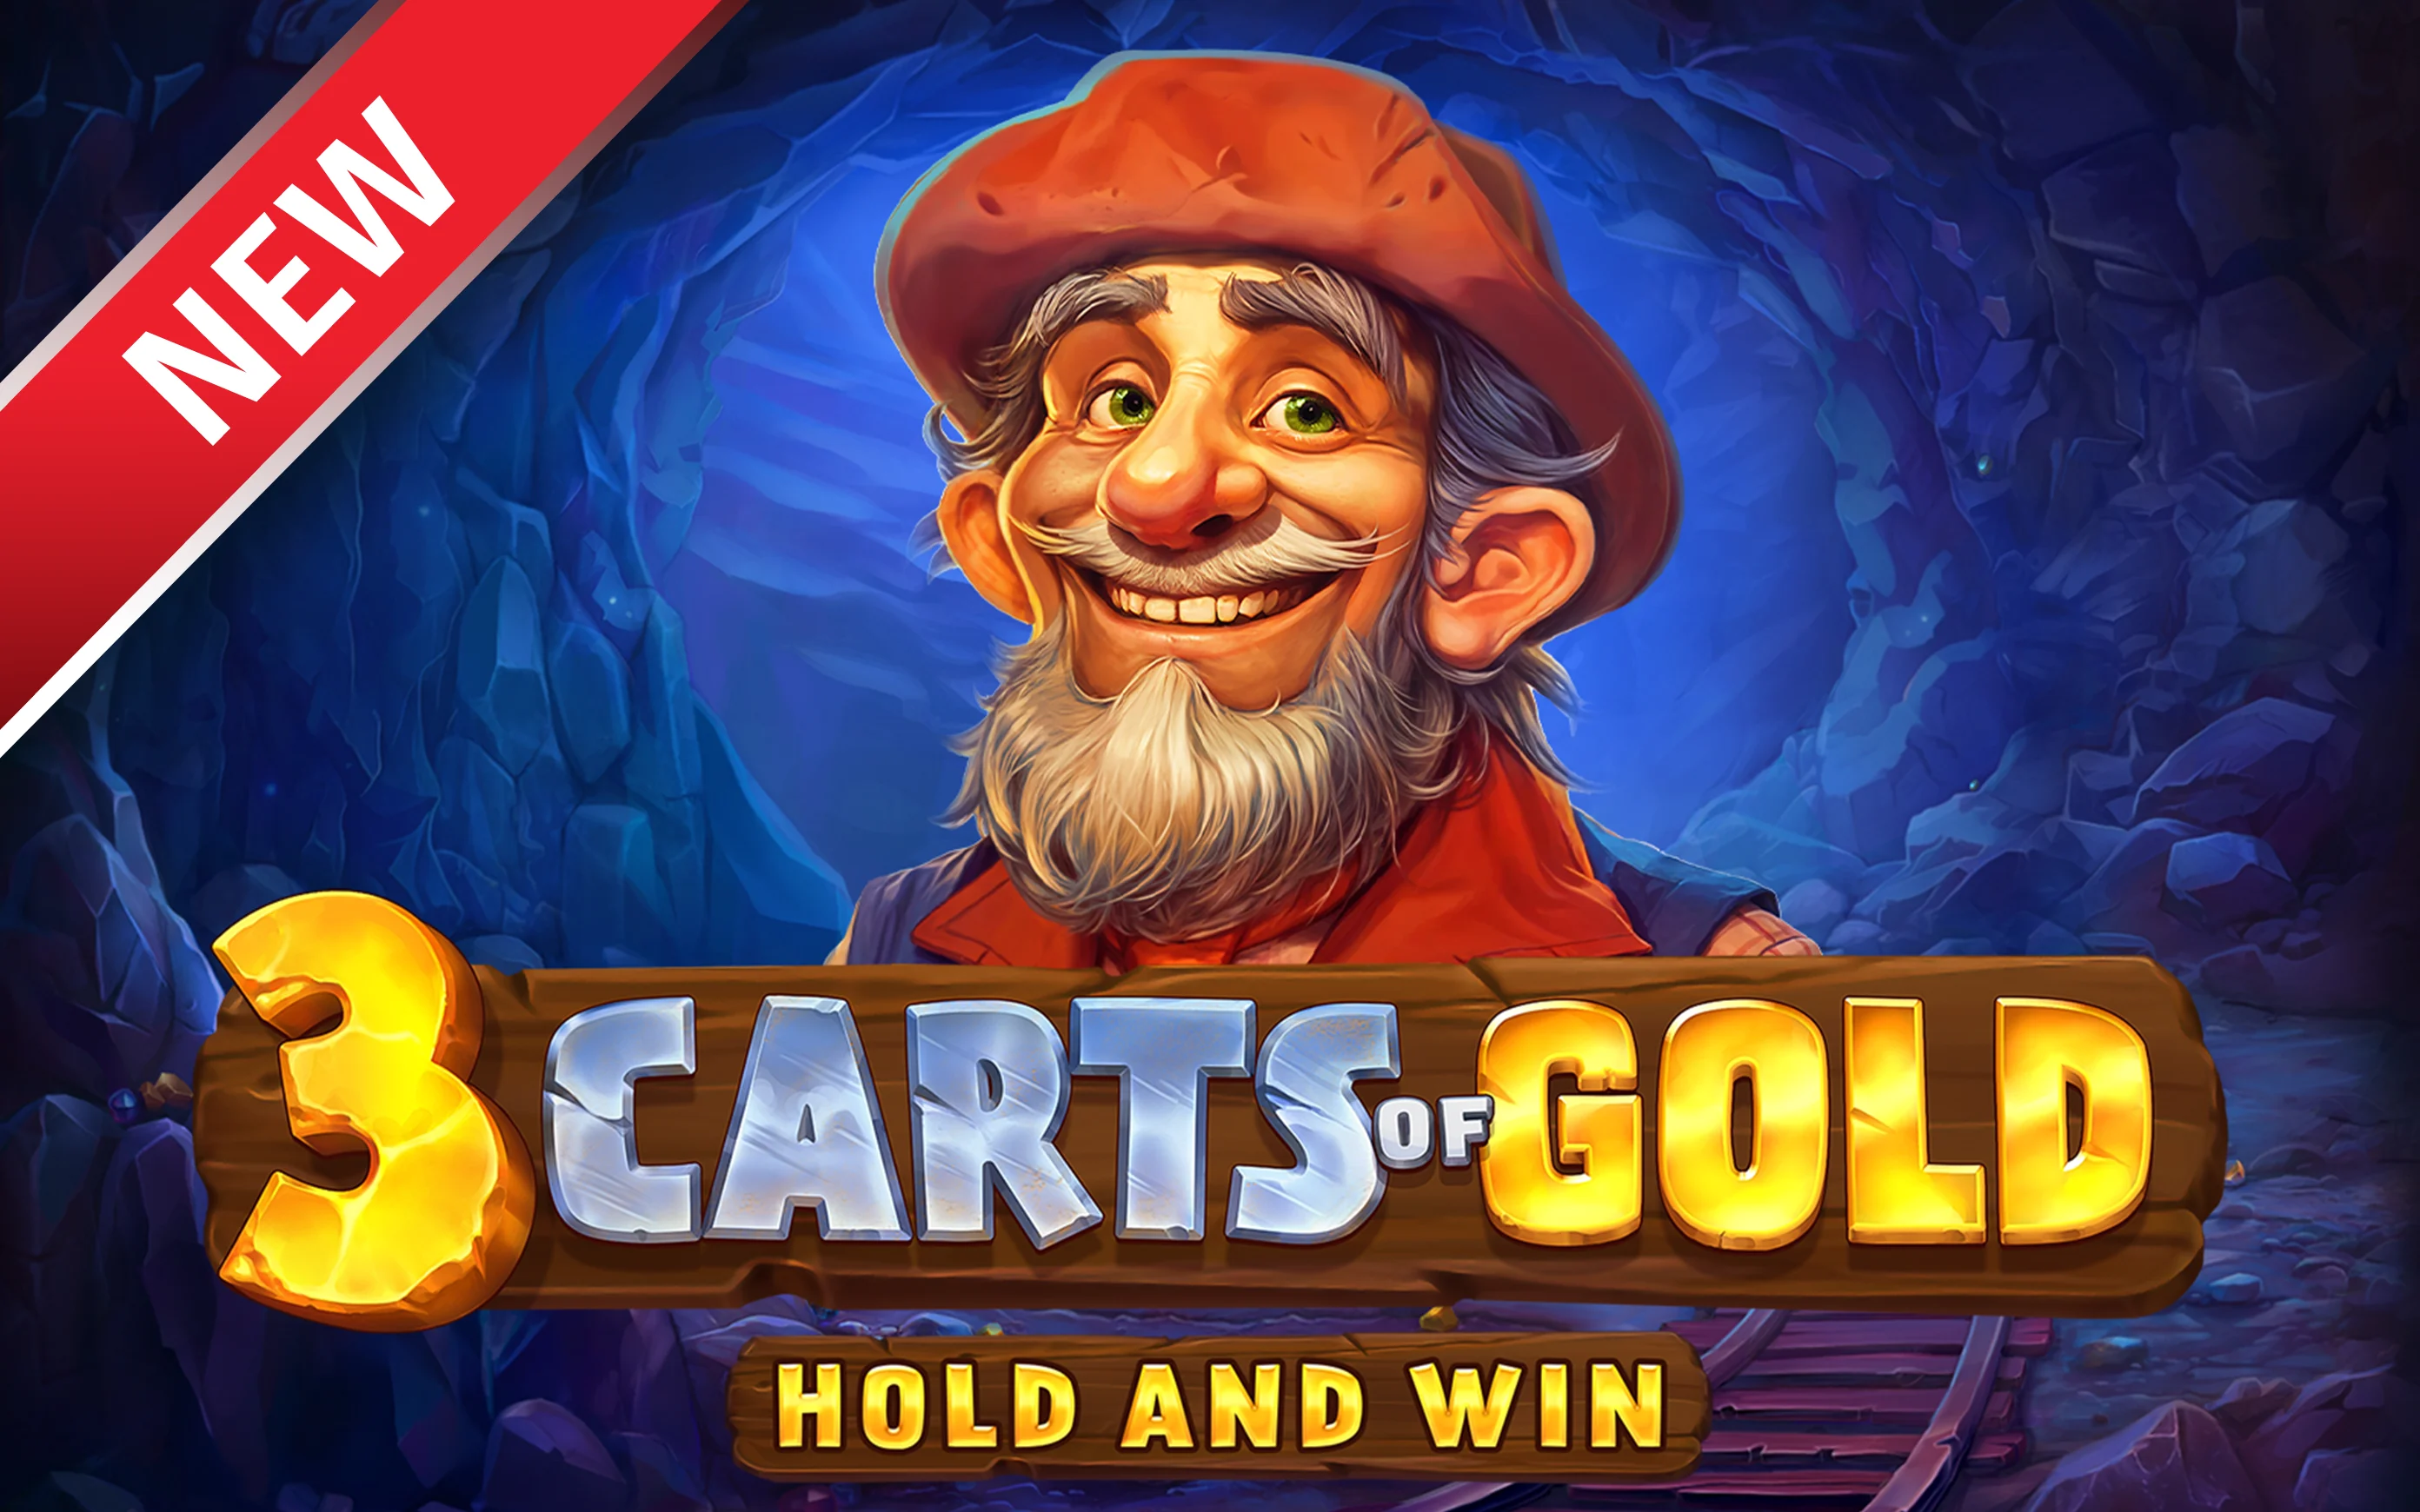 Starcasino.be online casino üzerinden 3 Carts of Gold: Hold and Win oynayın